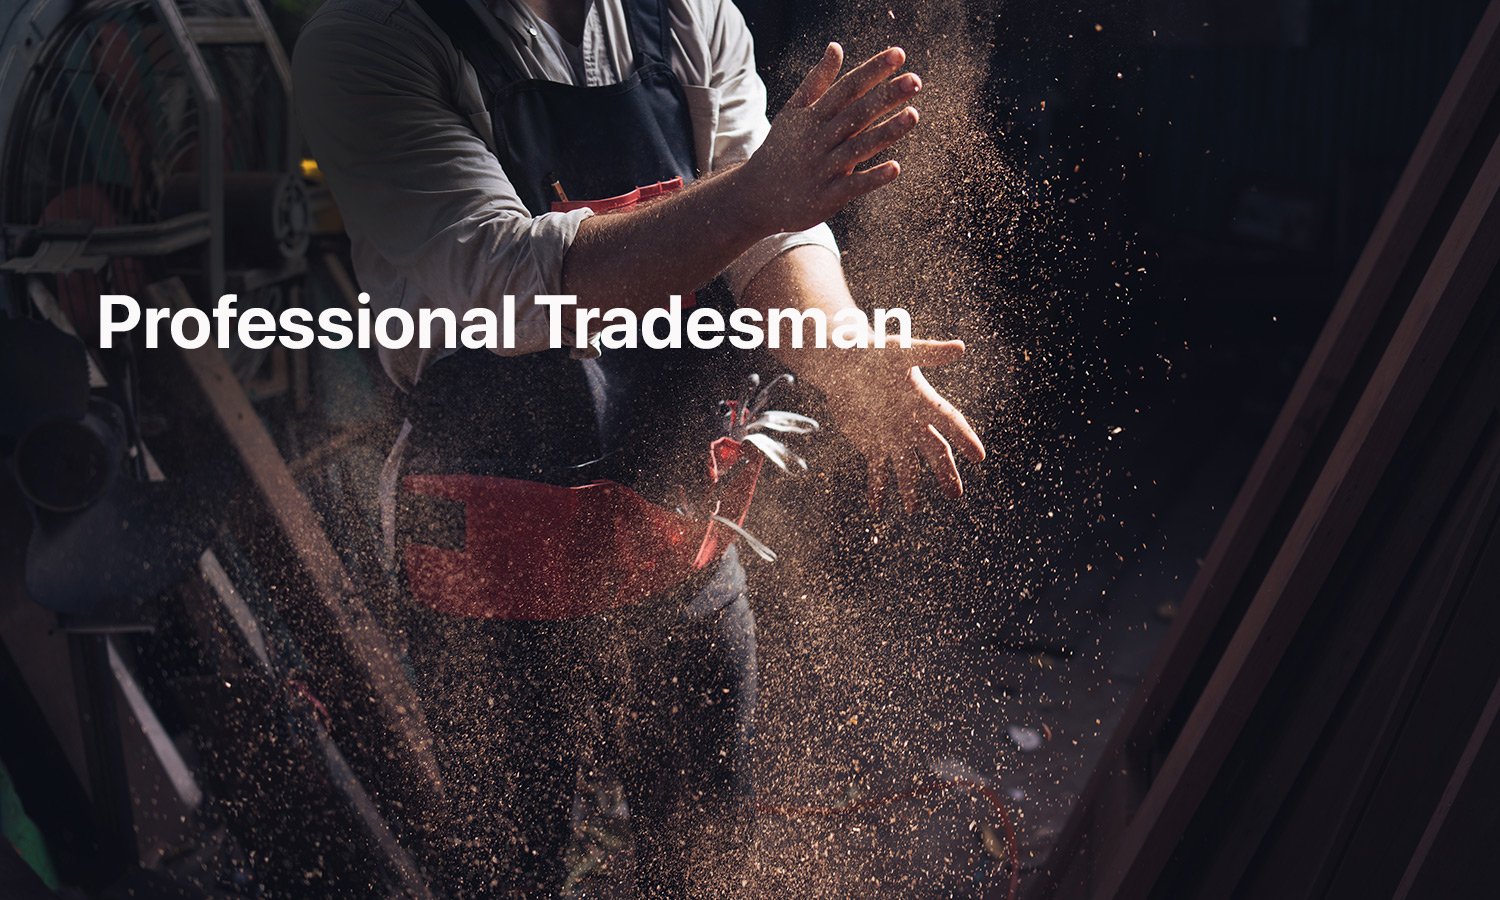 Professional Tradesman